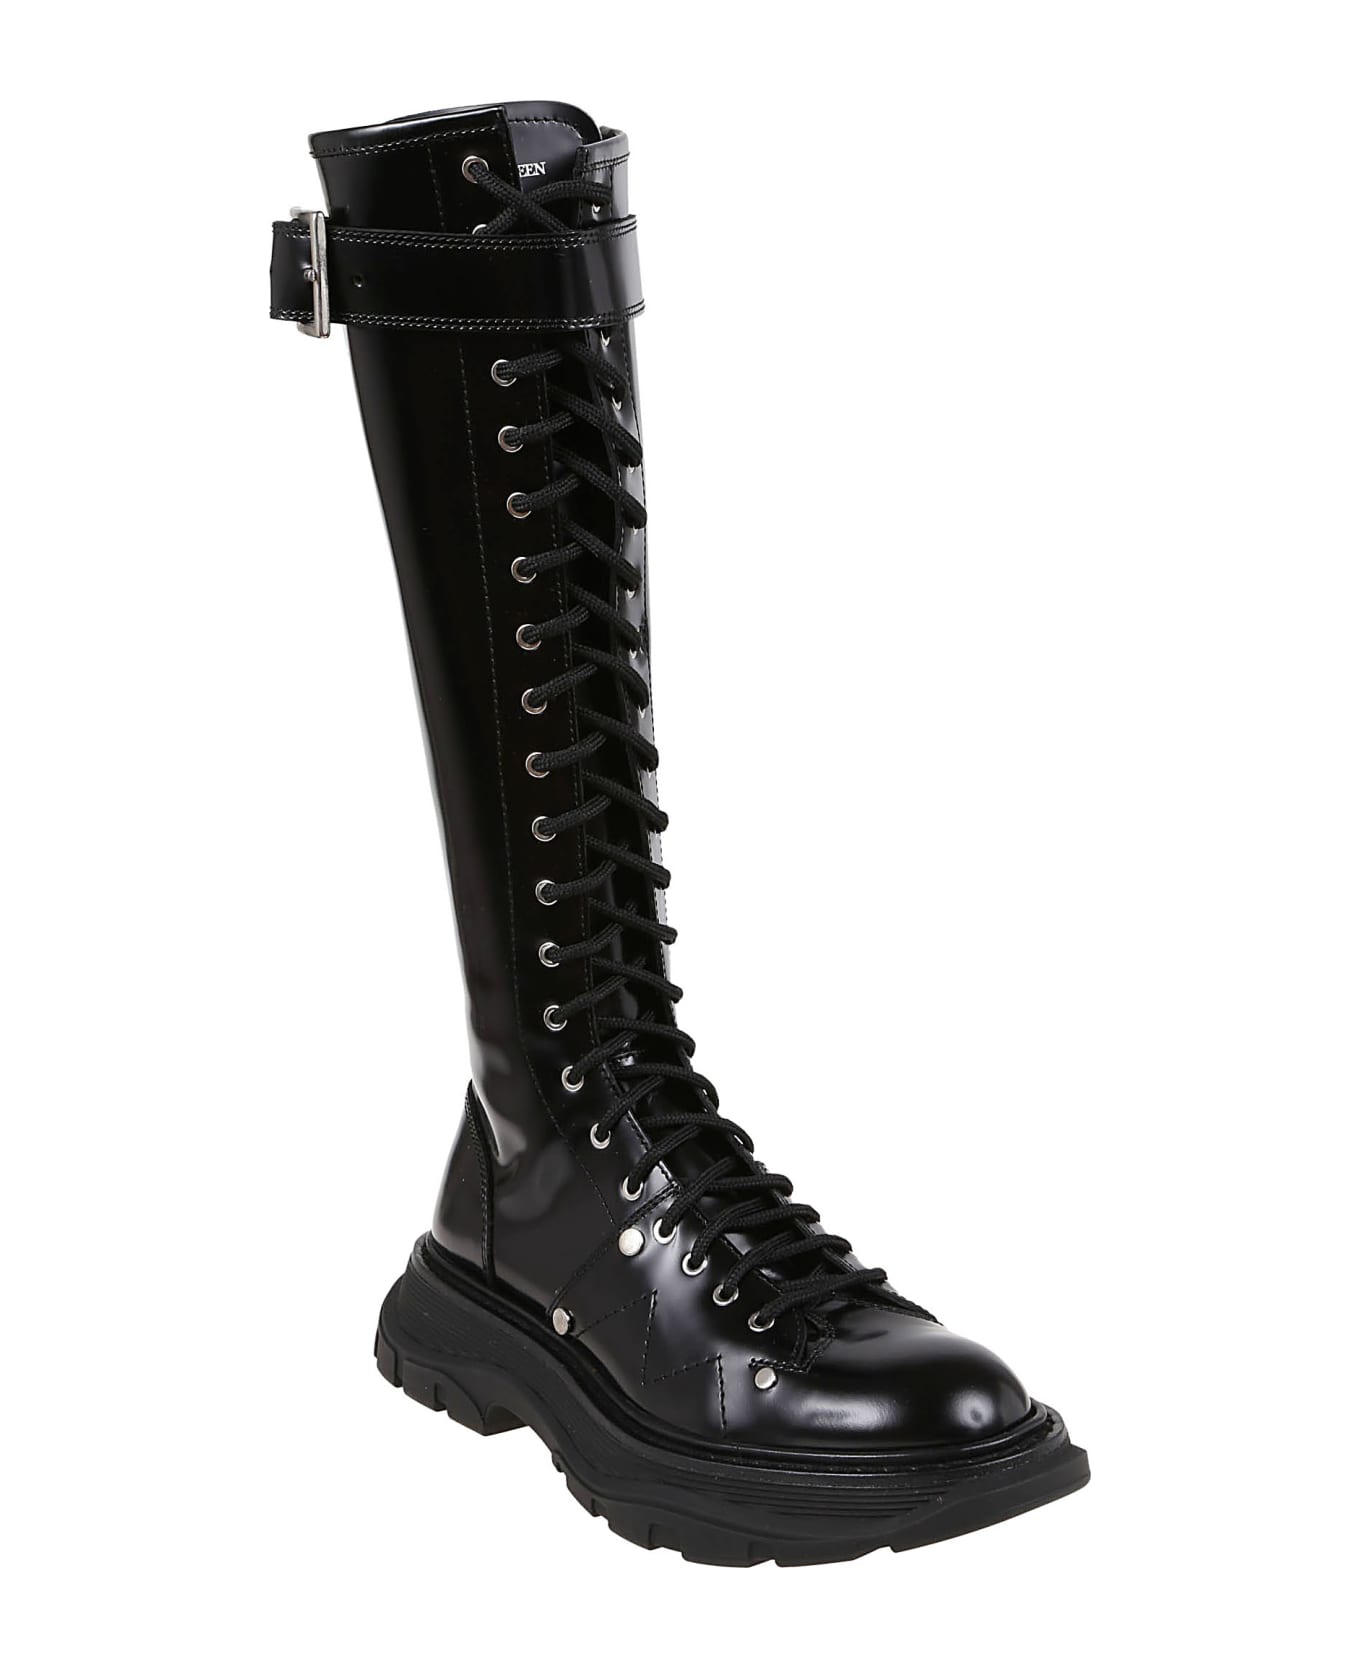 Alexander McQueen Leather Tread Slick Boots - Blk Blk Blk Silver